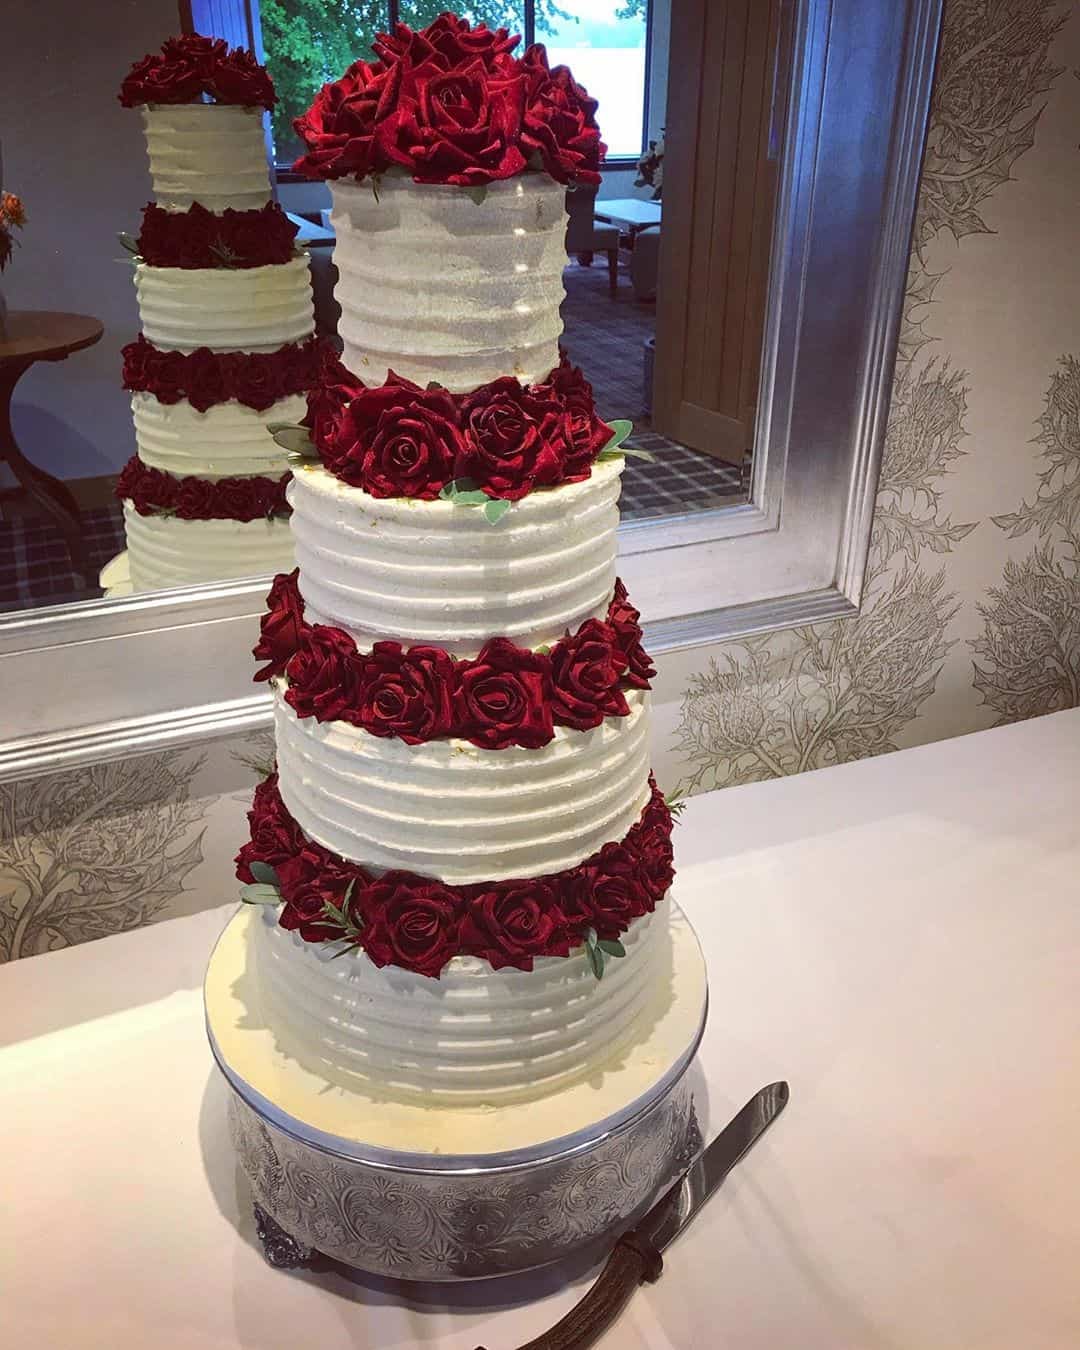 sunflower-bakehouse-glasgow-scottish-wedding-cakes-red-rose-design